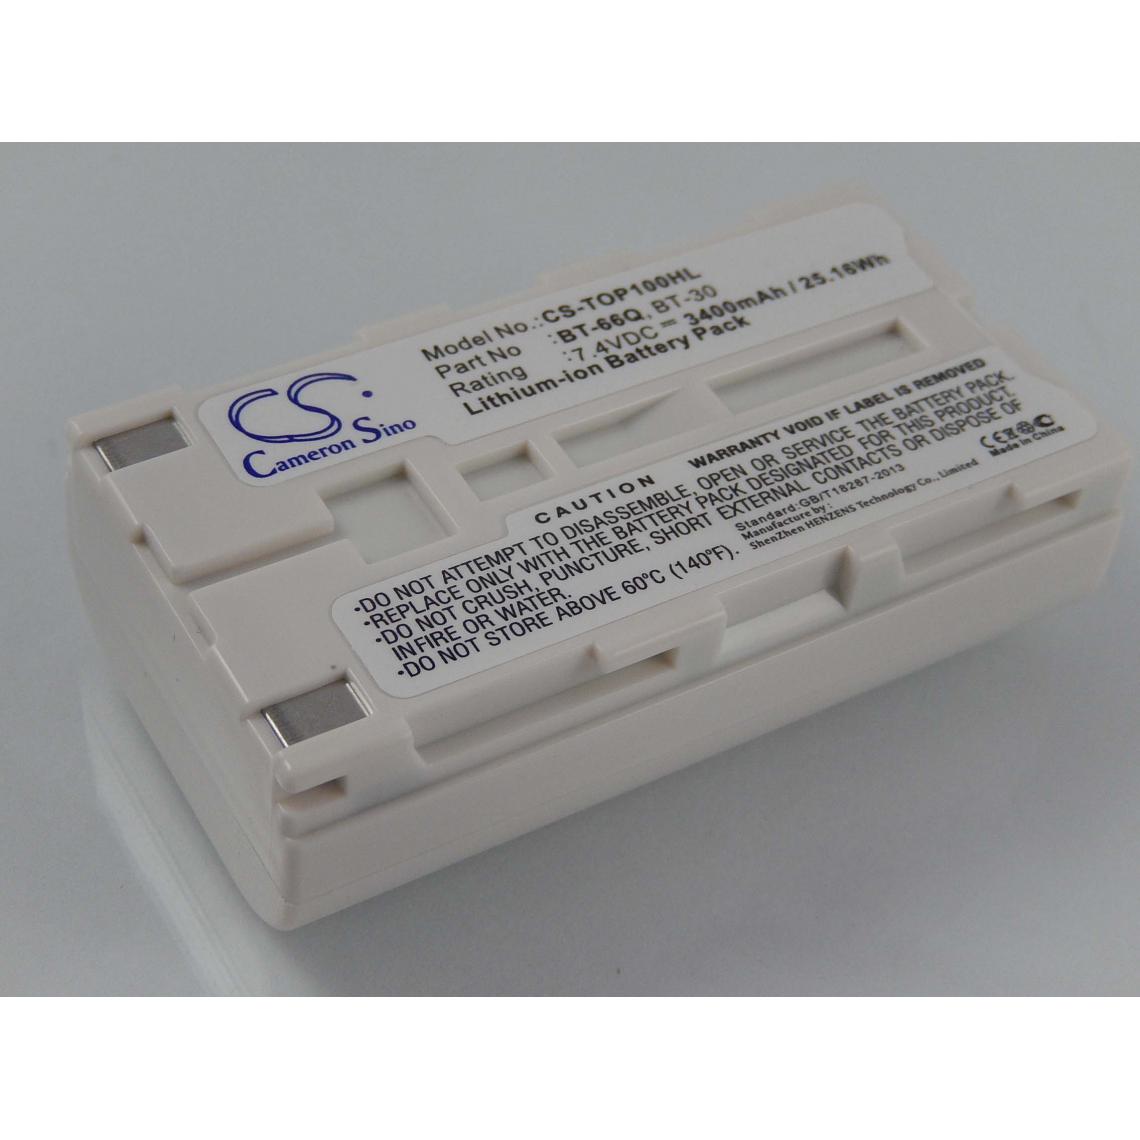 Vhbw - vhbw Batterie compatible avec Topcon Field Controller GRS-1, GTS-750, GTS-751, GTS-900, RC-3 outil de mesure (3400mAh, 7,4V, Li-ion) - Piles rechargeables